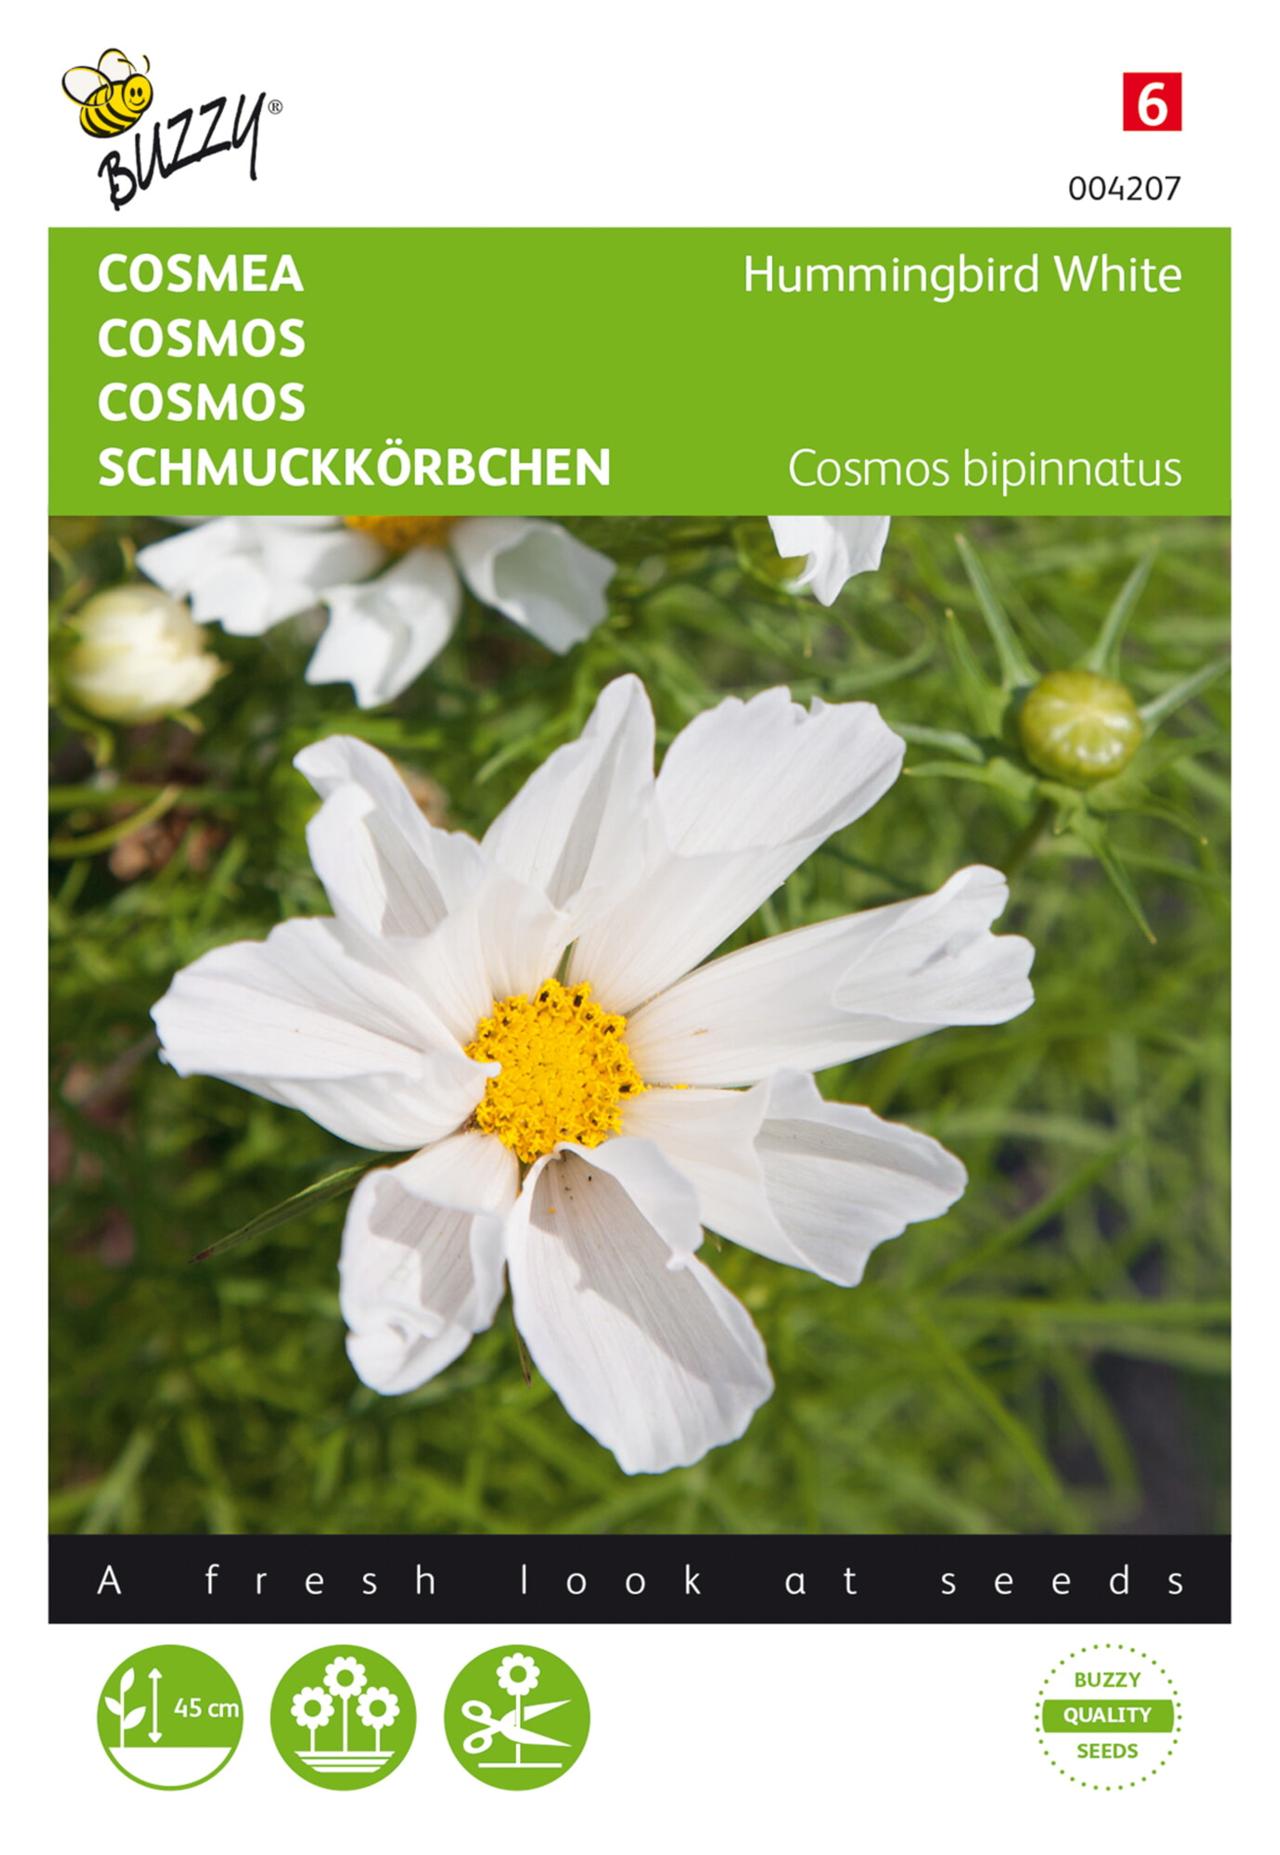 Cosmos bippinnatus 'Hummingbird White' plant